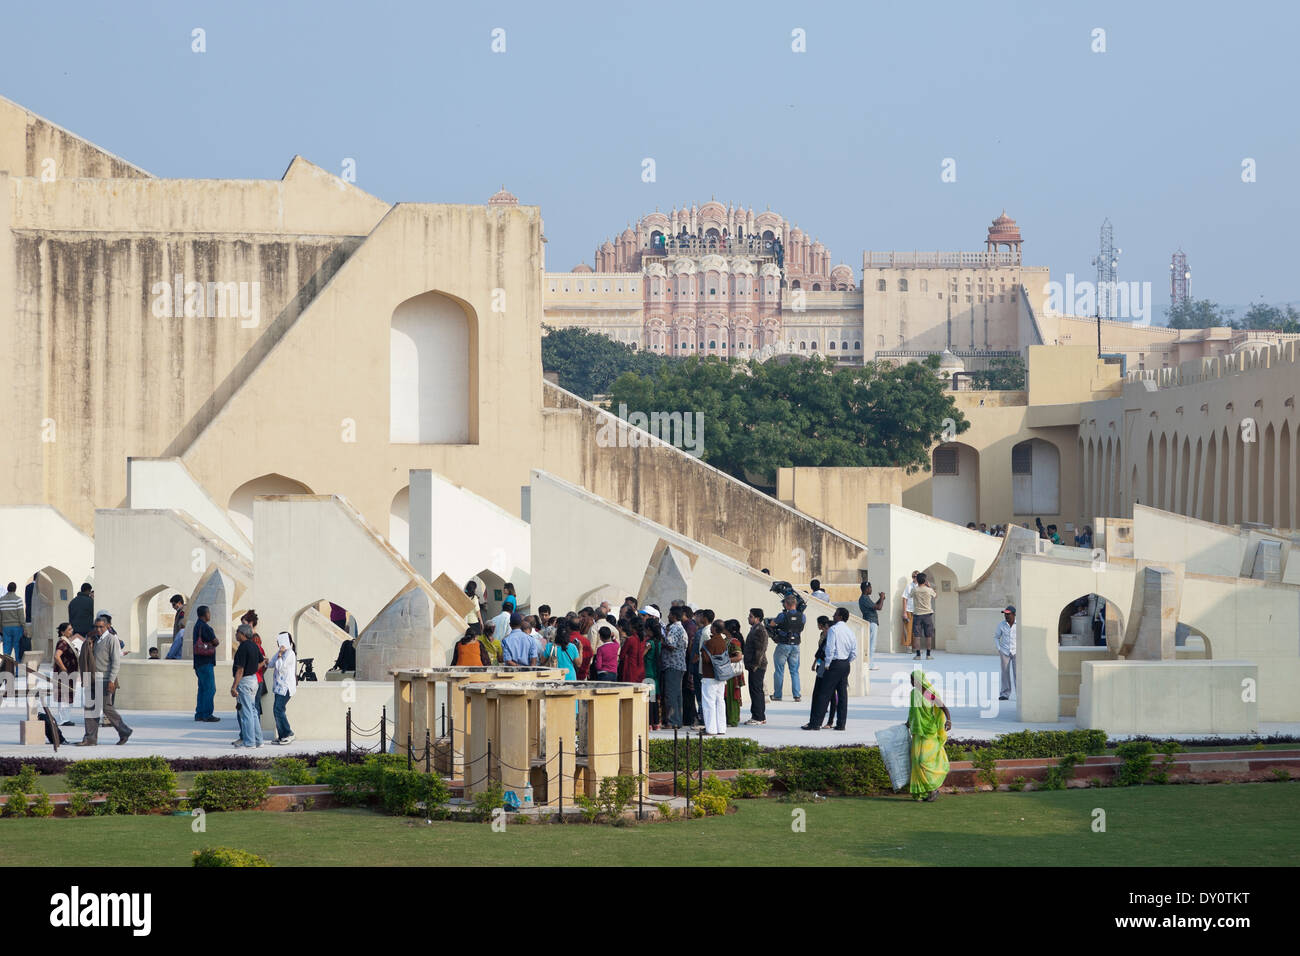 1Jaipur, Rajasthan, India. Jantar Mantar Observatory e il palazzo dei venti (Hawa Mahal) in base alla distanza Foto Stock